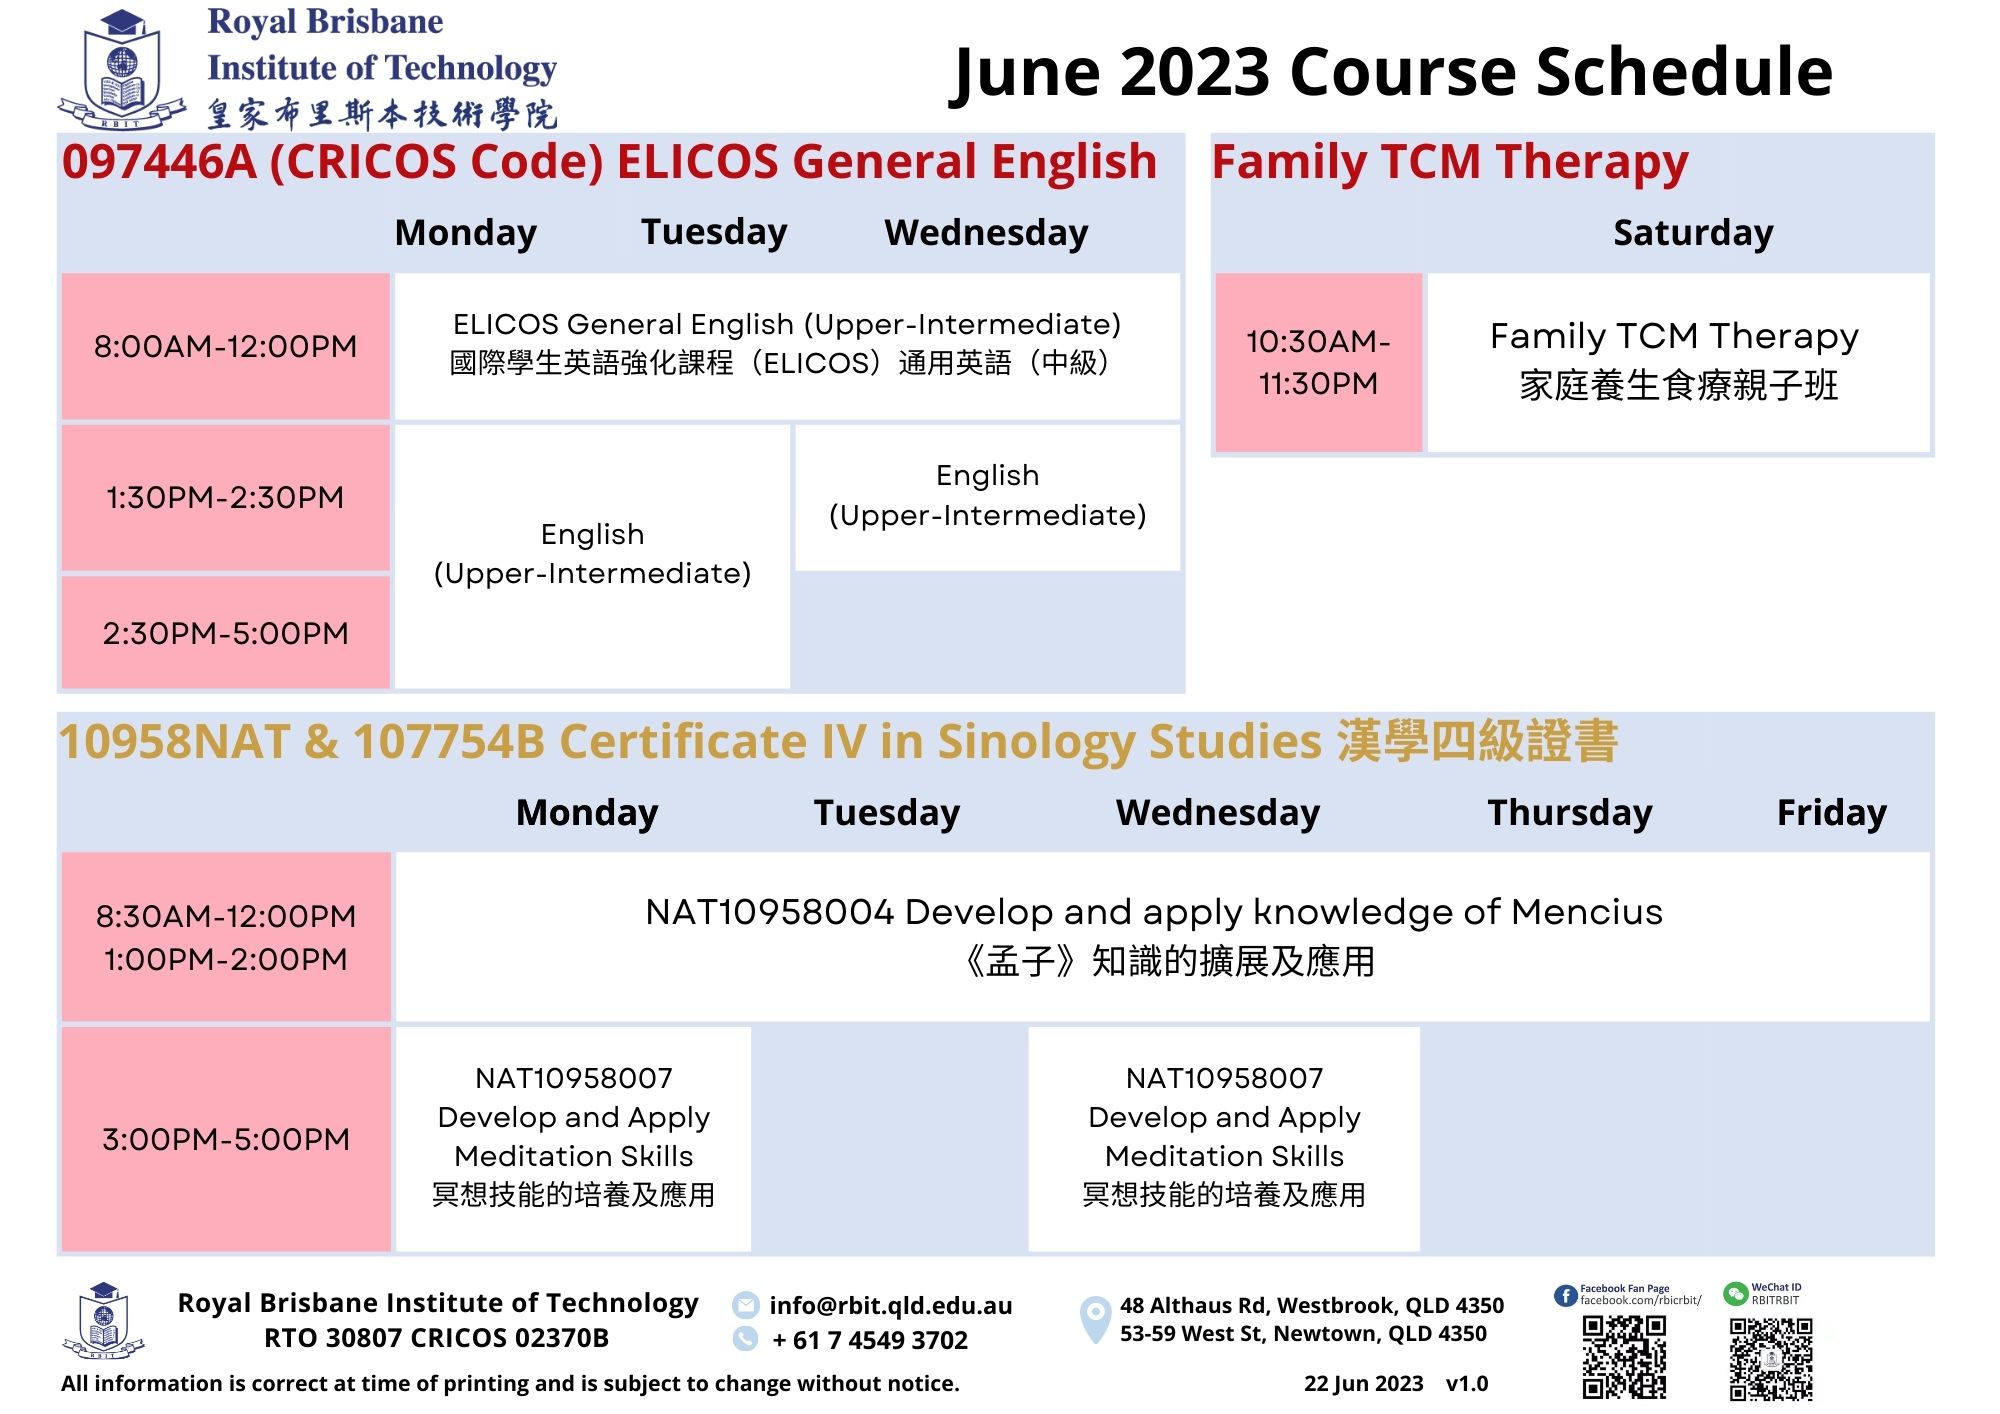 AL0_June 2023 Course Schedule_v1.0